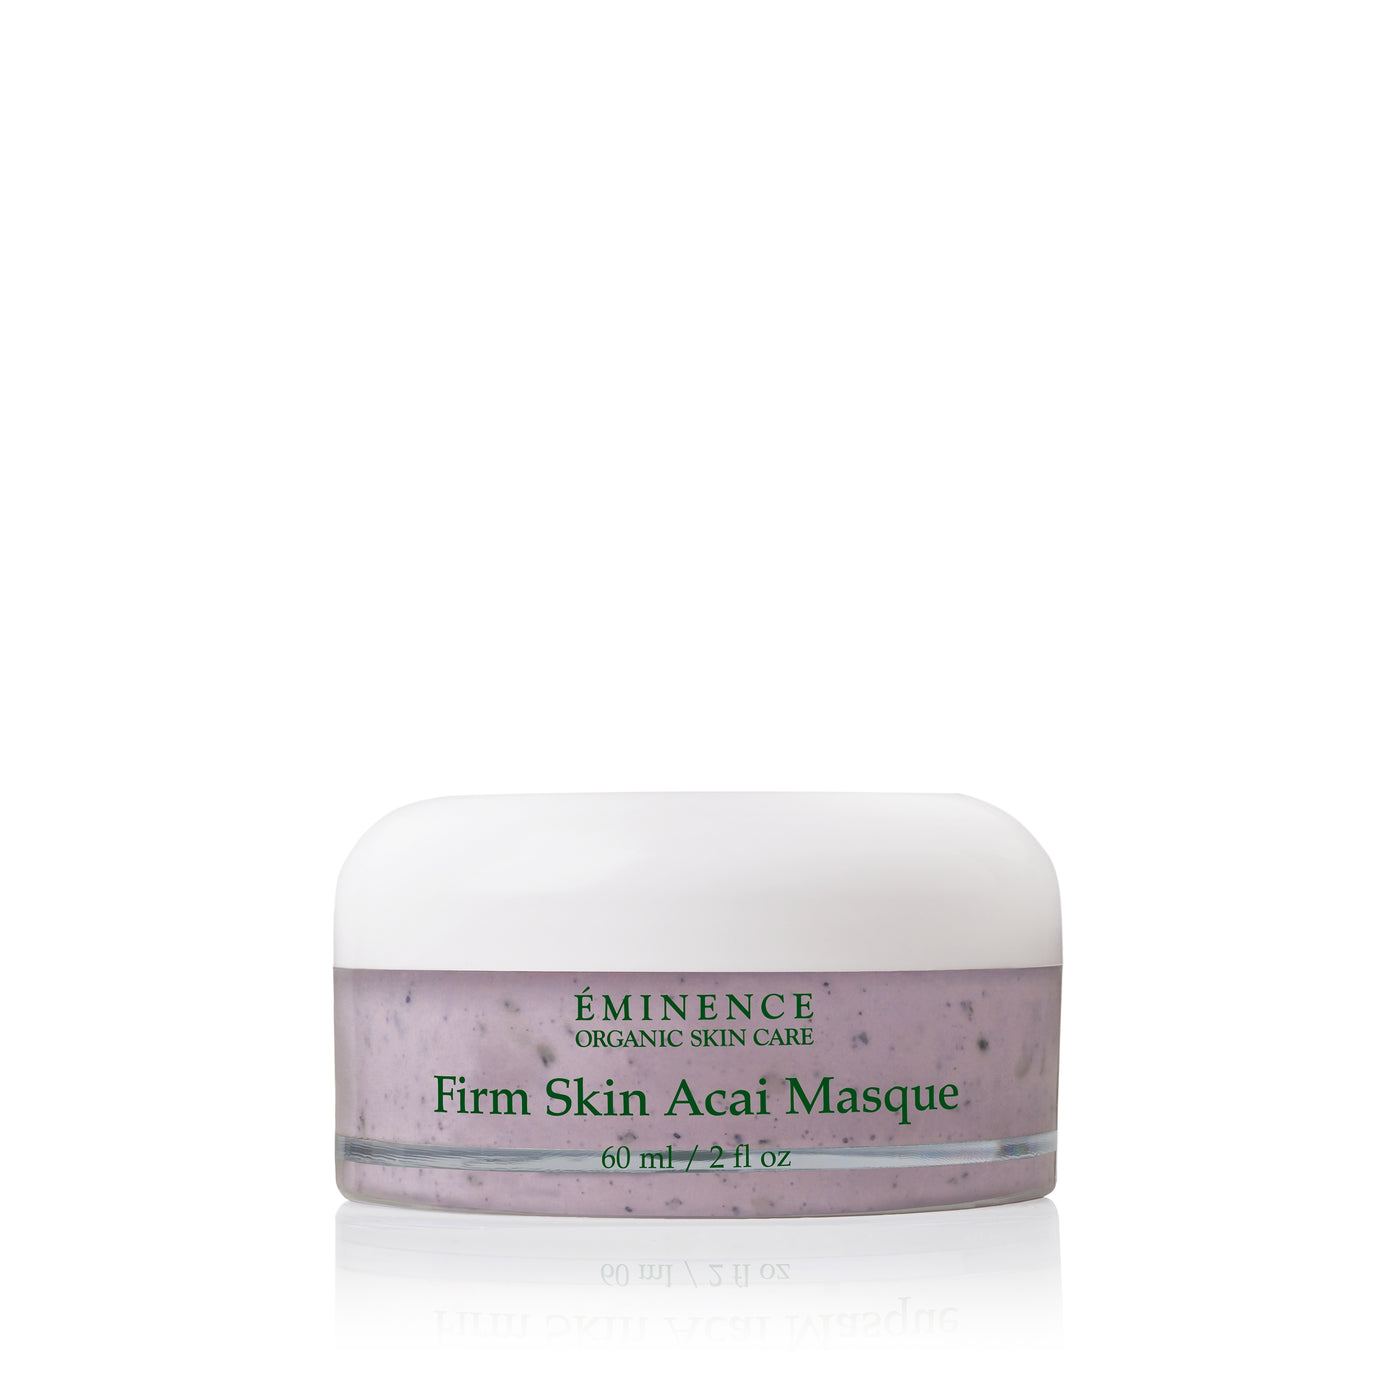 Eminence Organics Firm Skin Acai Masque - Radiance Clean Beauty